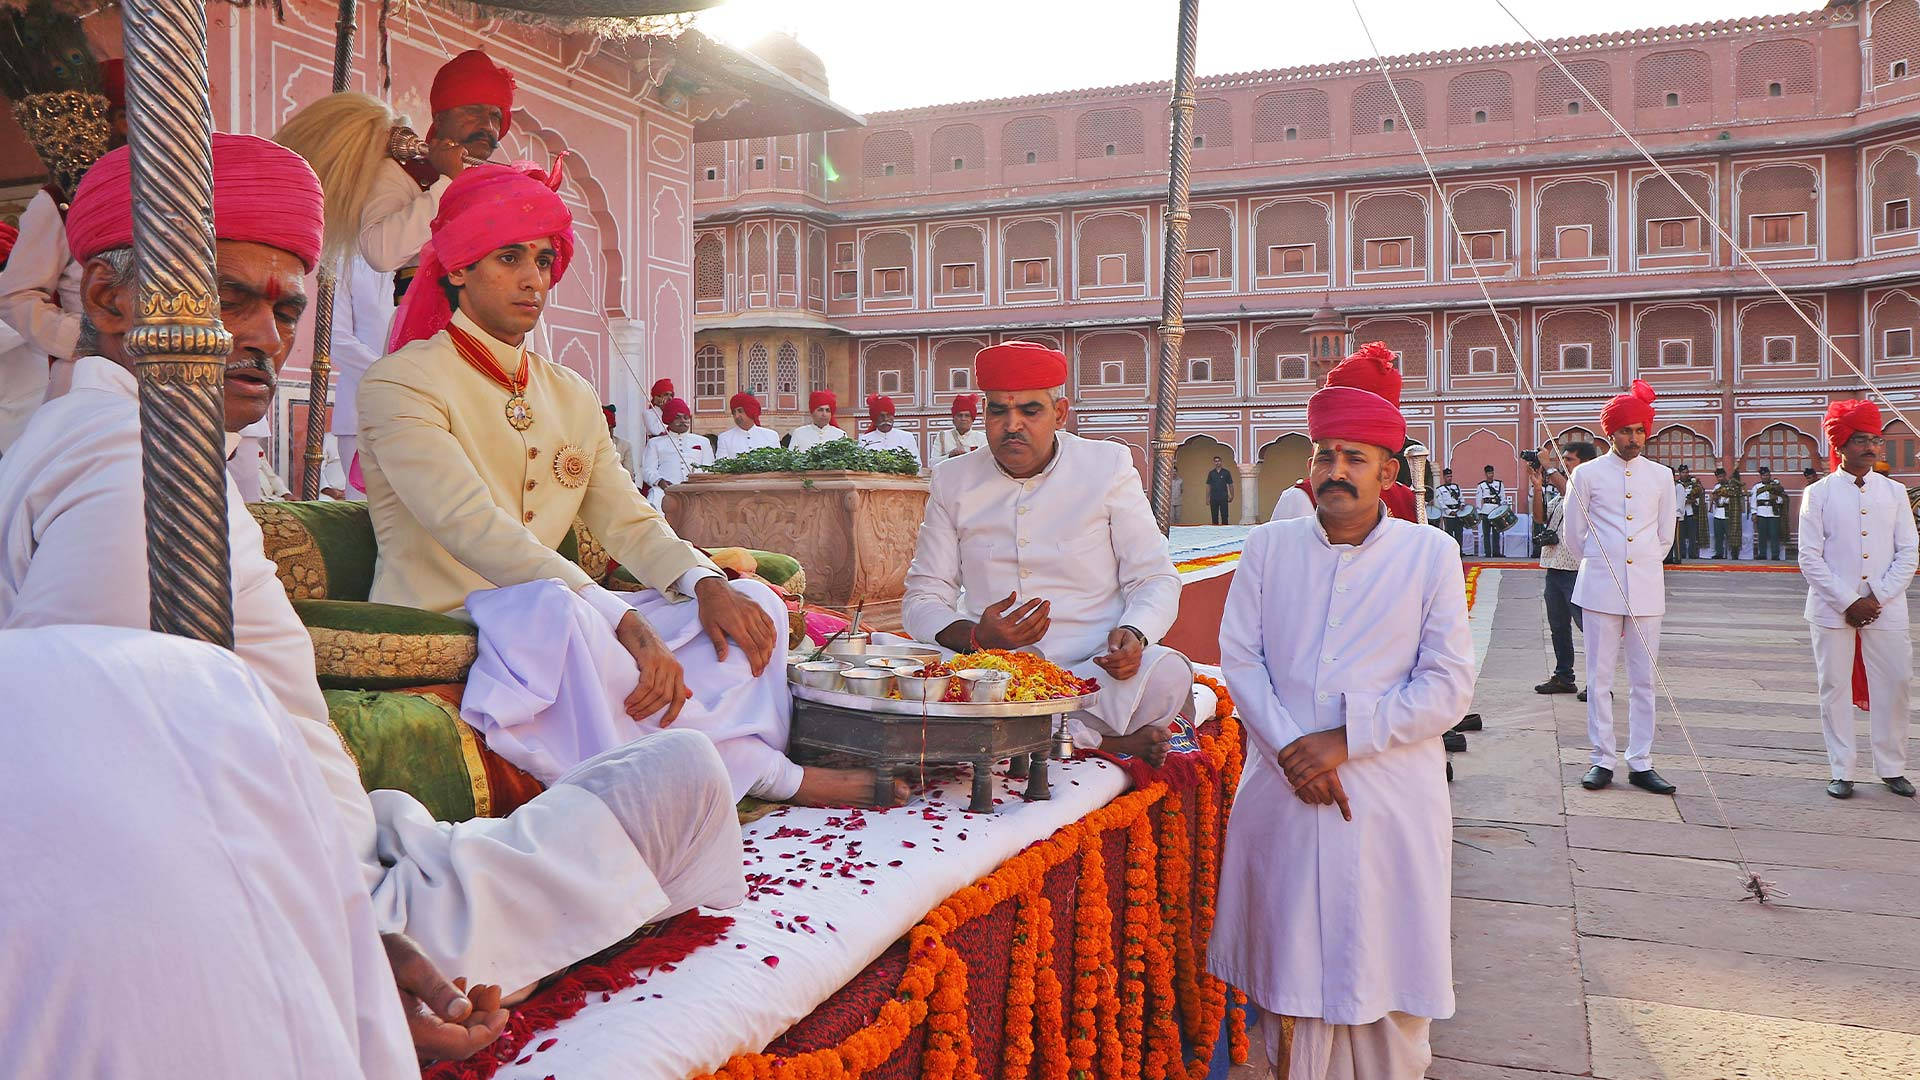 Maharajapadmanabh Singh Ammira Il Ricco Patrimonio Del City Palace Di Jaipur. Sfondo